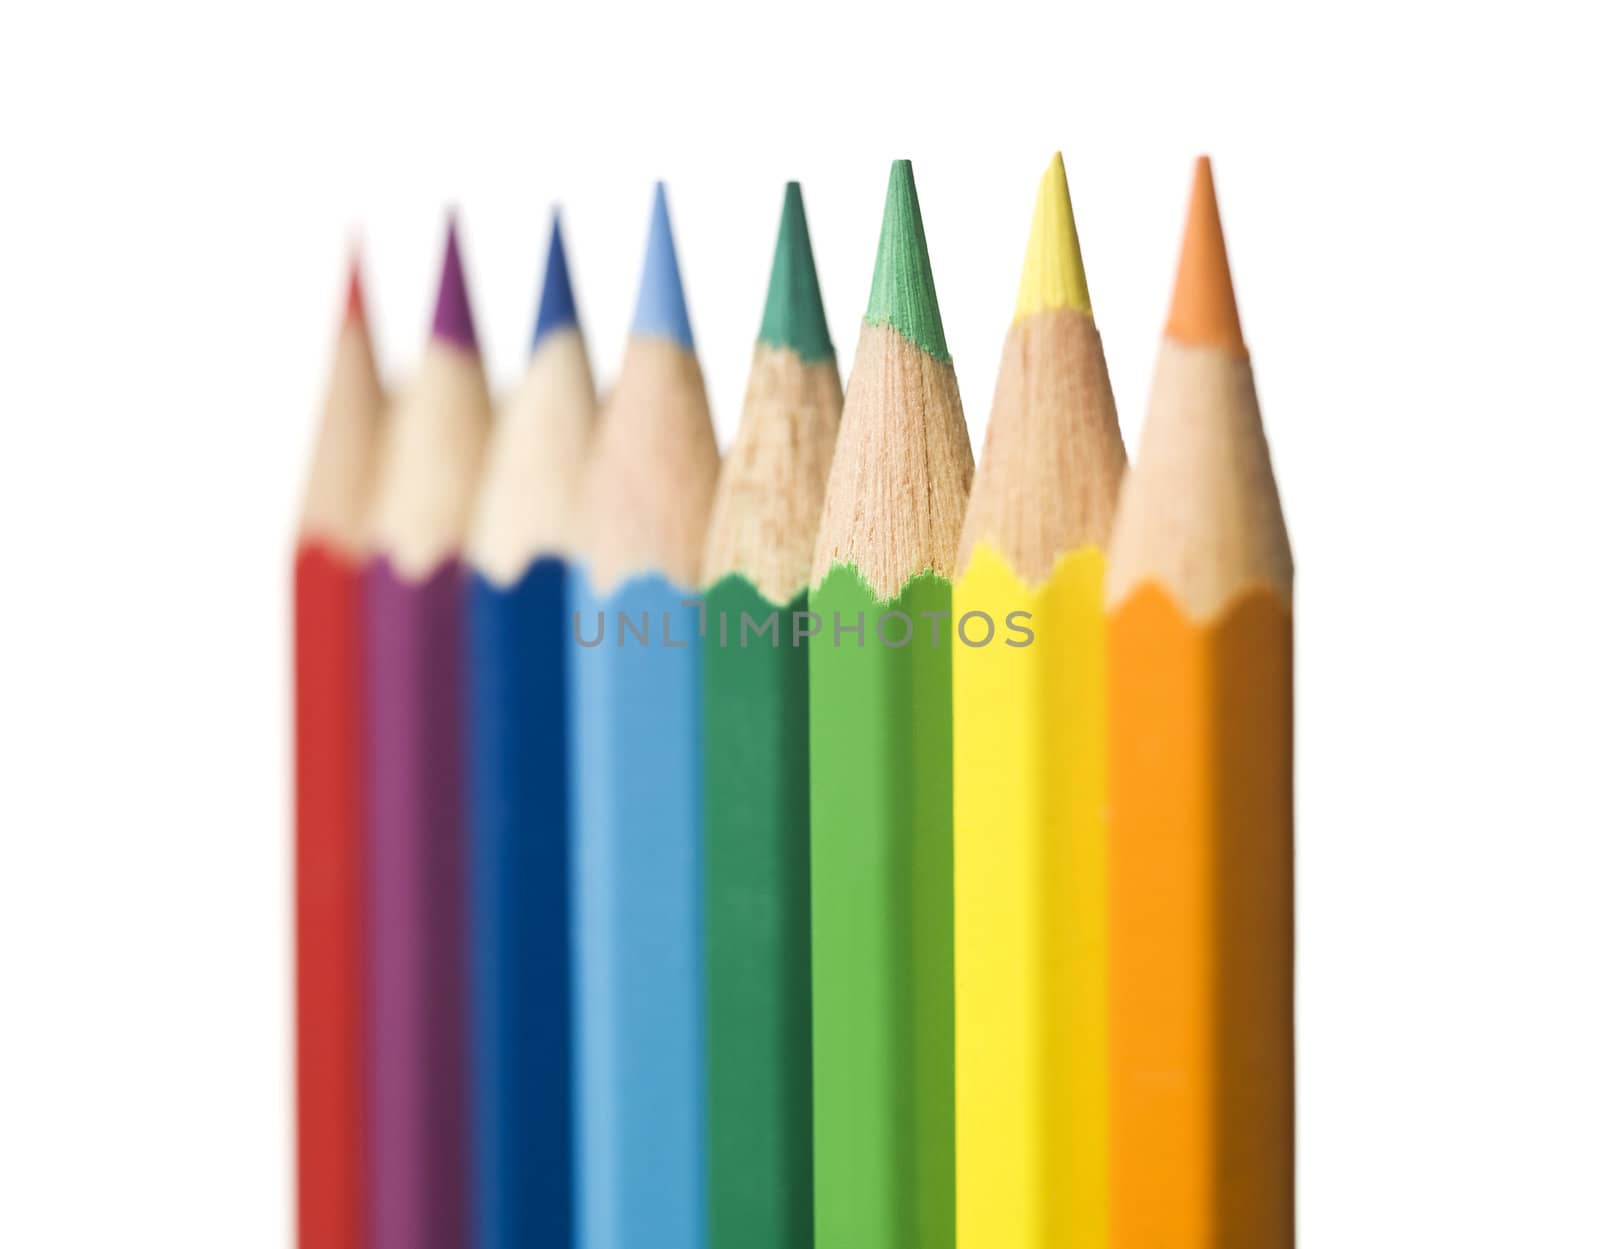 Row of colourd pencils